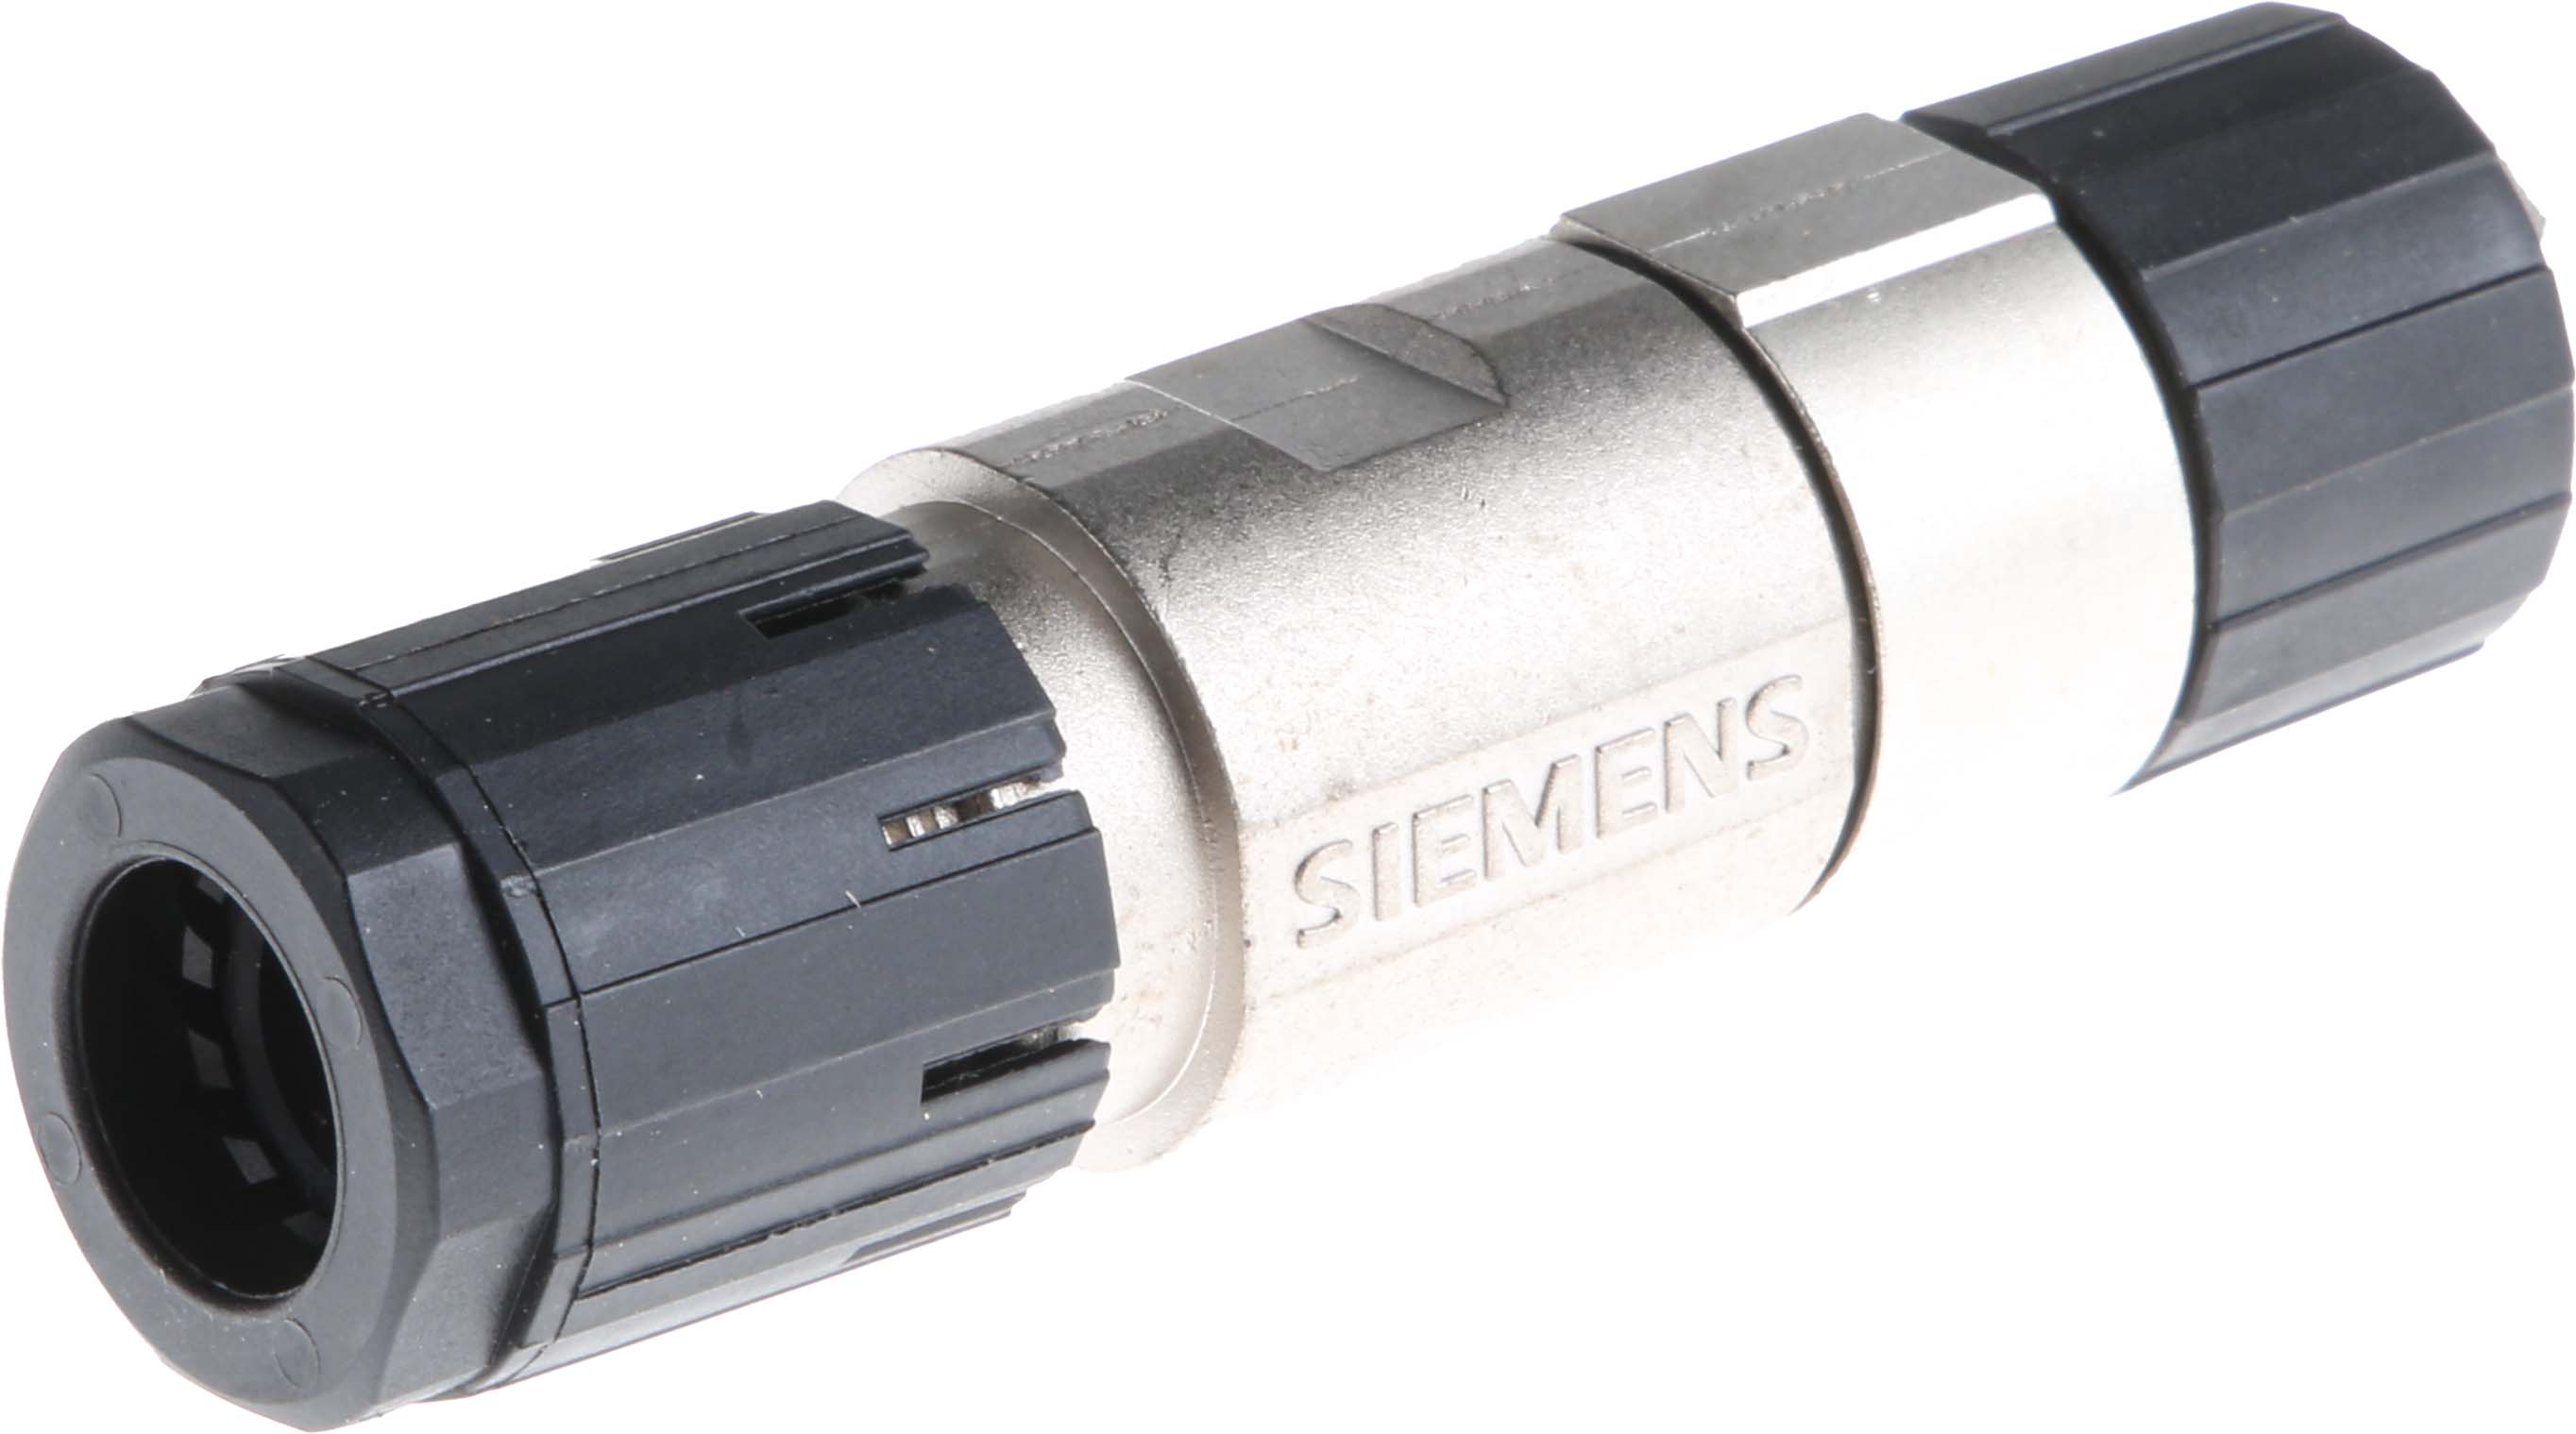 Conector de adquisición de datos Siemens 6GK1905-0EB10 para usar con Red RS485